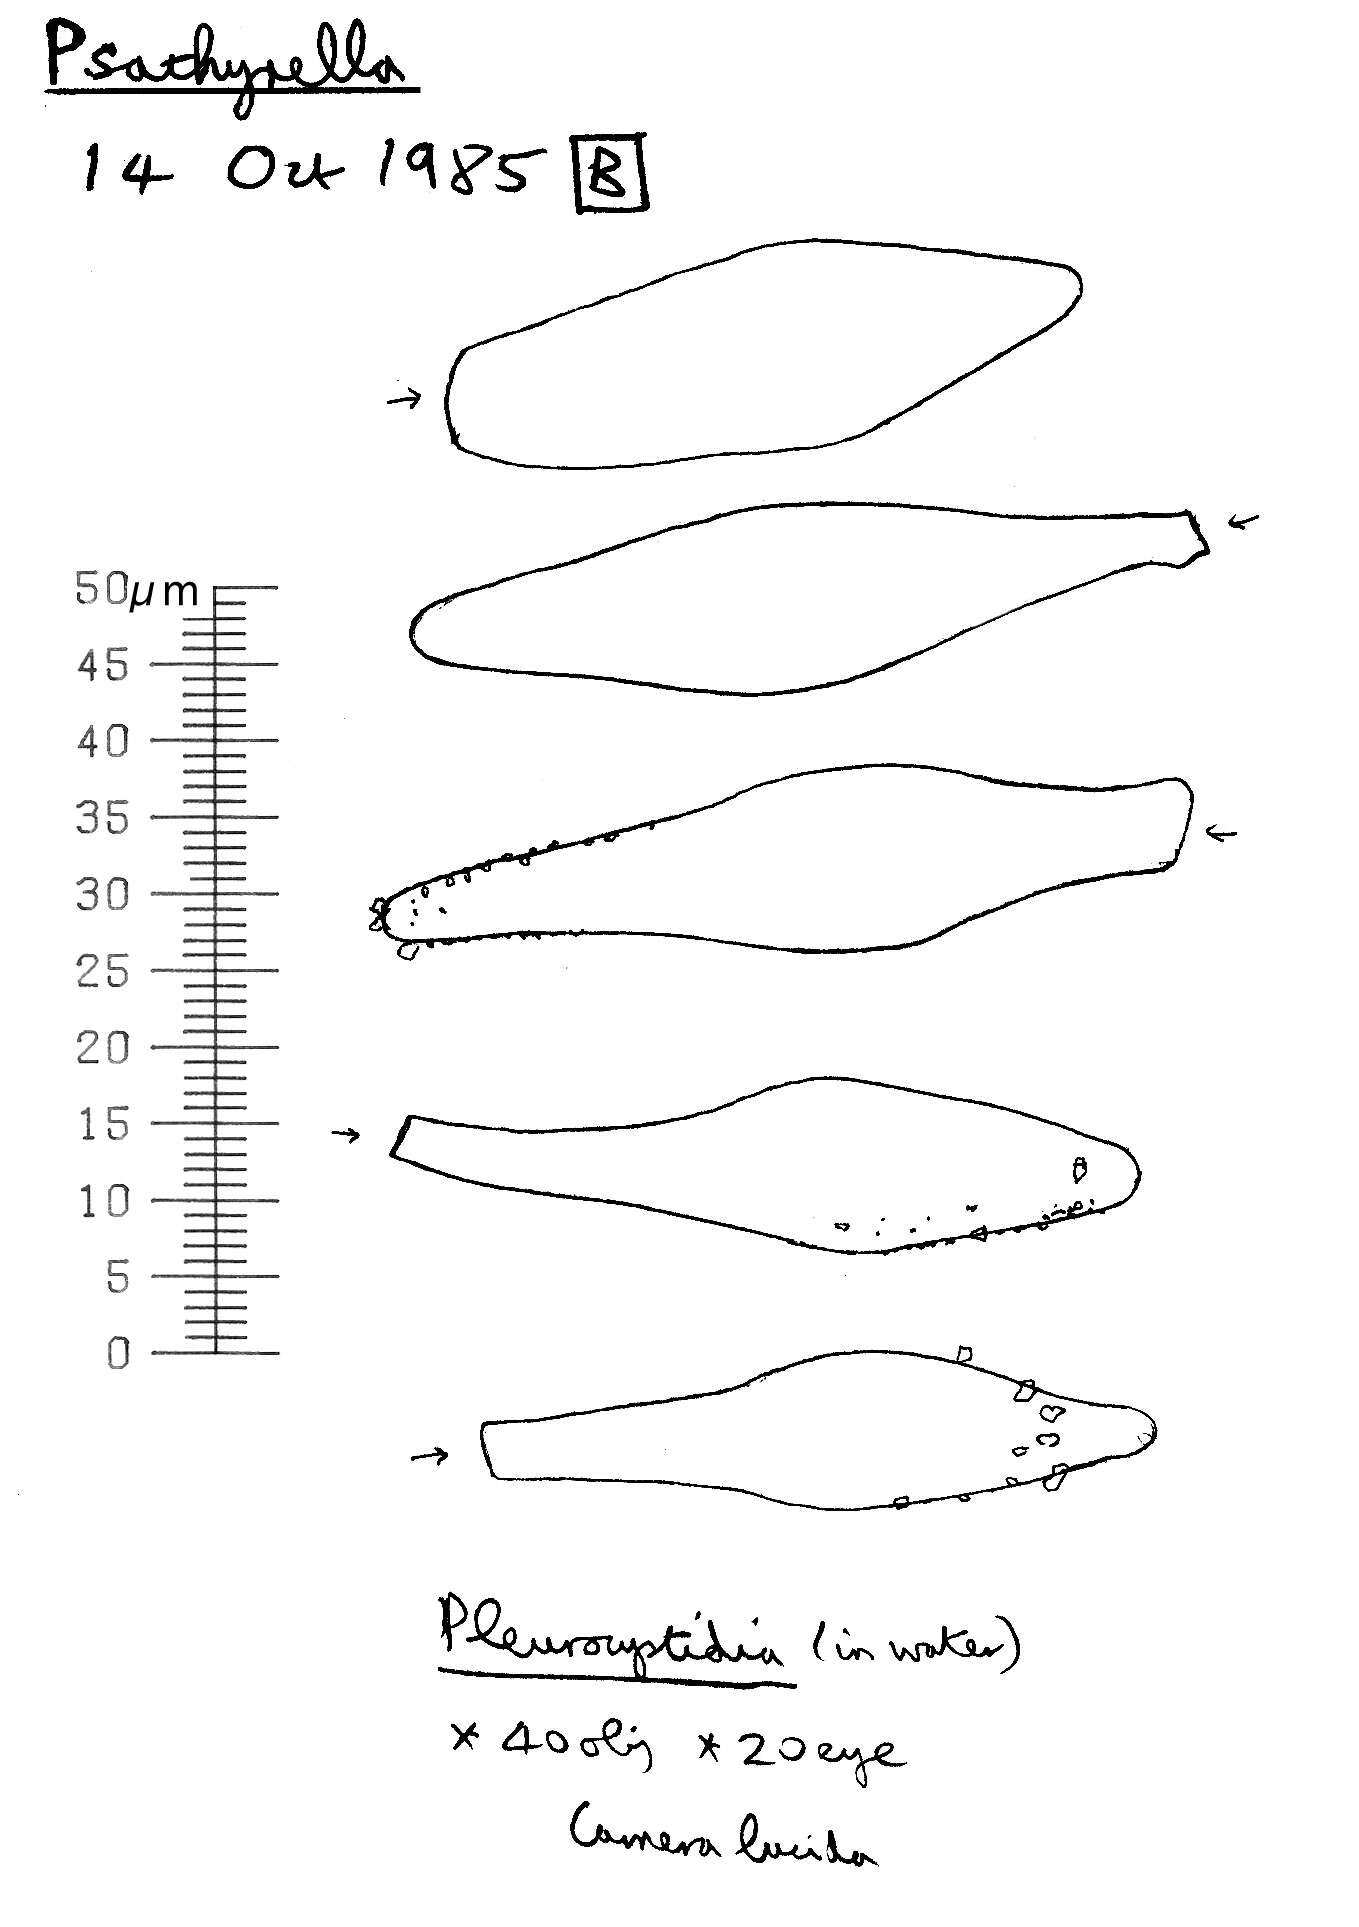 Image of Psathyrella senex (Peck) A. H. Sm. 1972